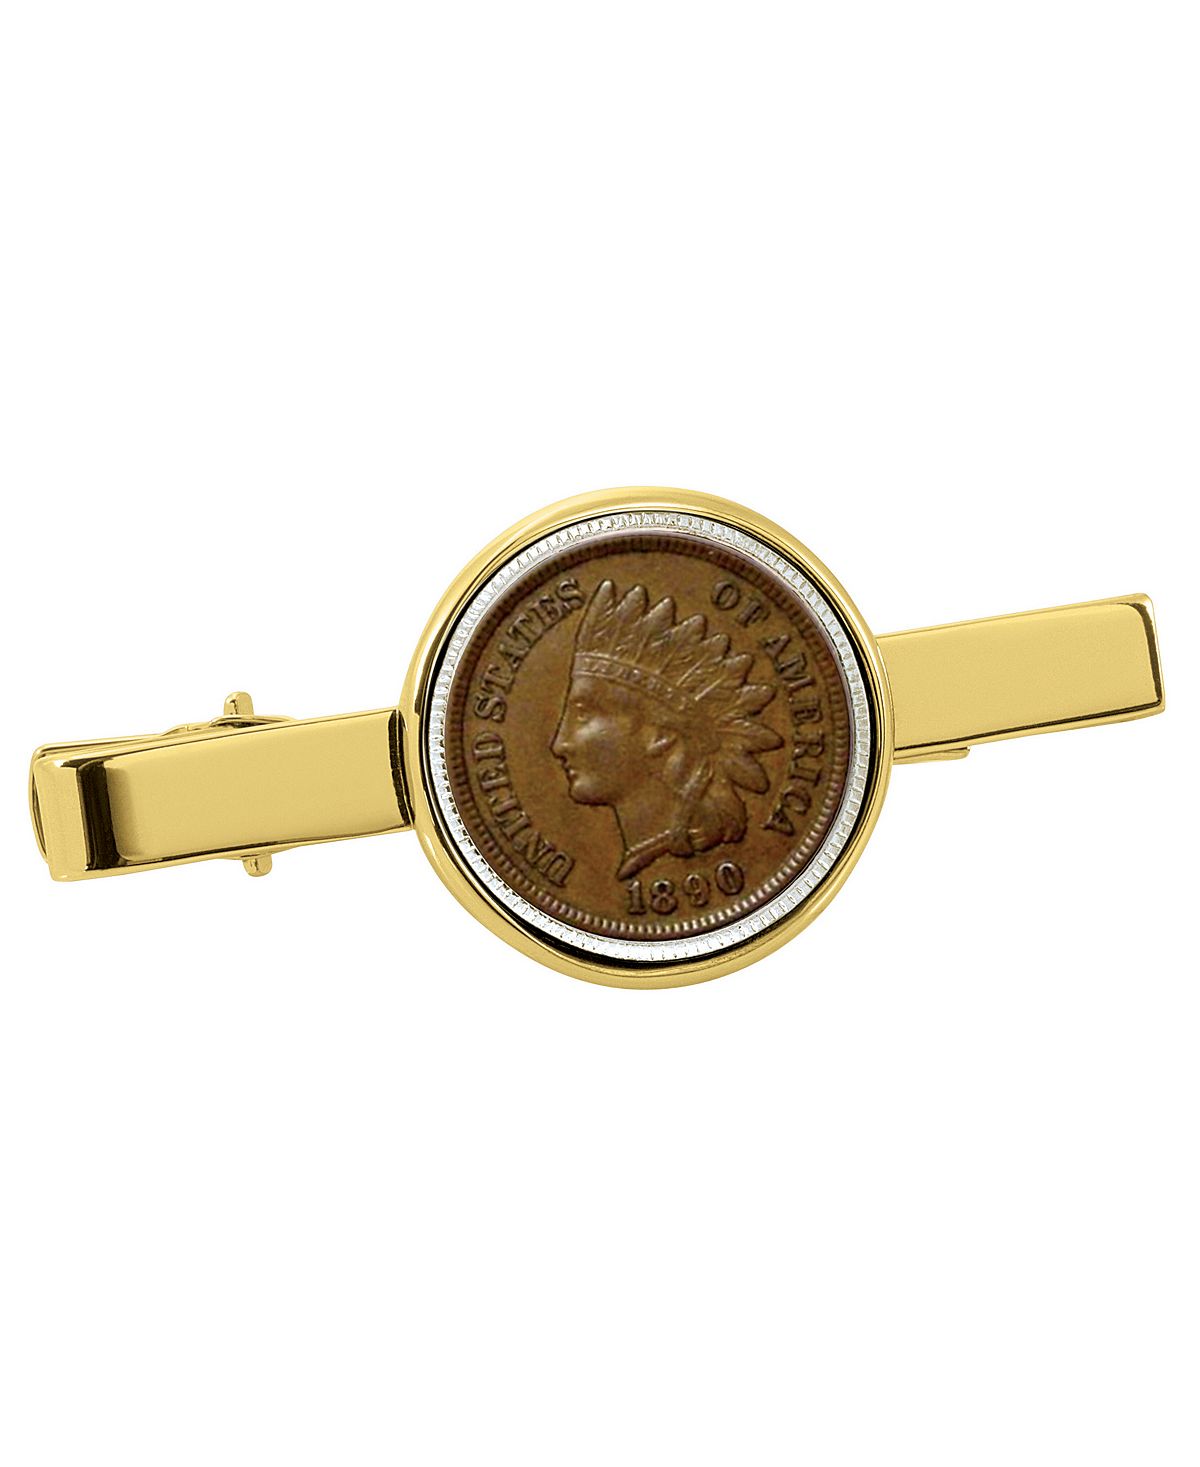 Зажим для галстука в виде индийской монеты-пенни 1800-х годов American Coin Treasures 2021 maple leaf gold coin commonwealth queen s coin commemorative coin badge gift souvenir coins